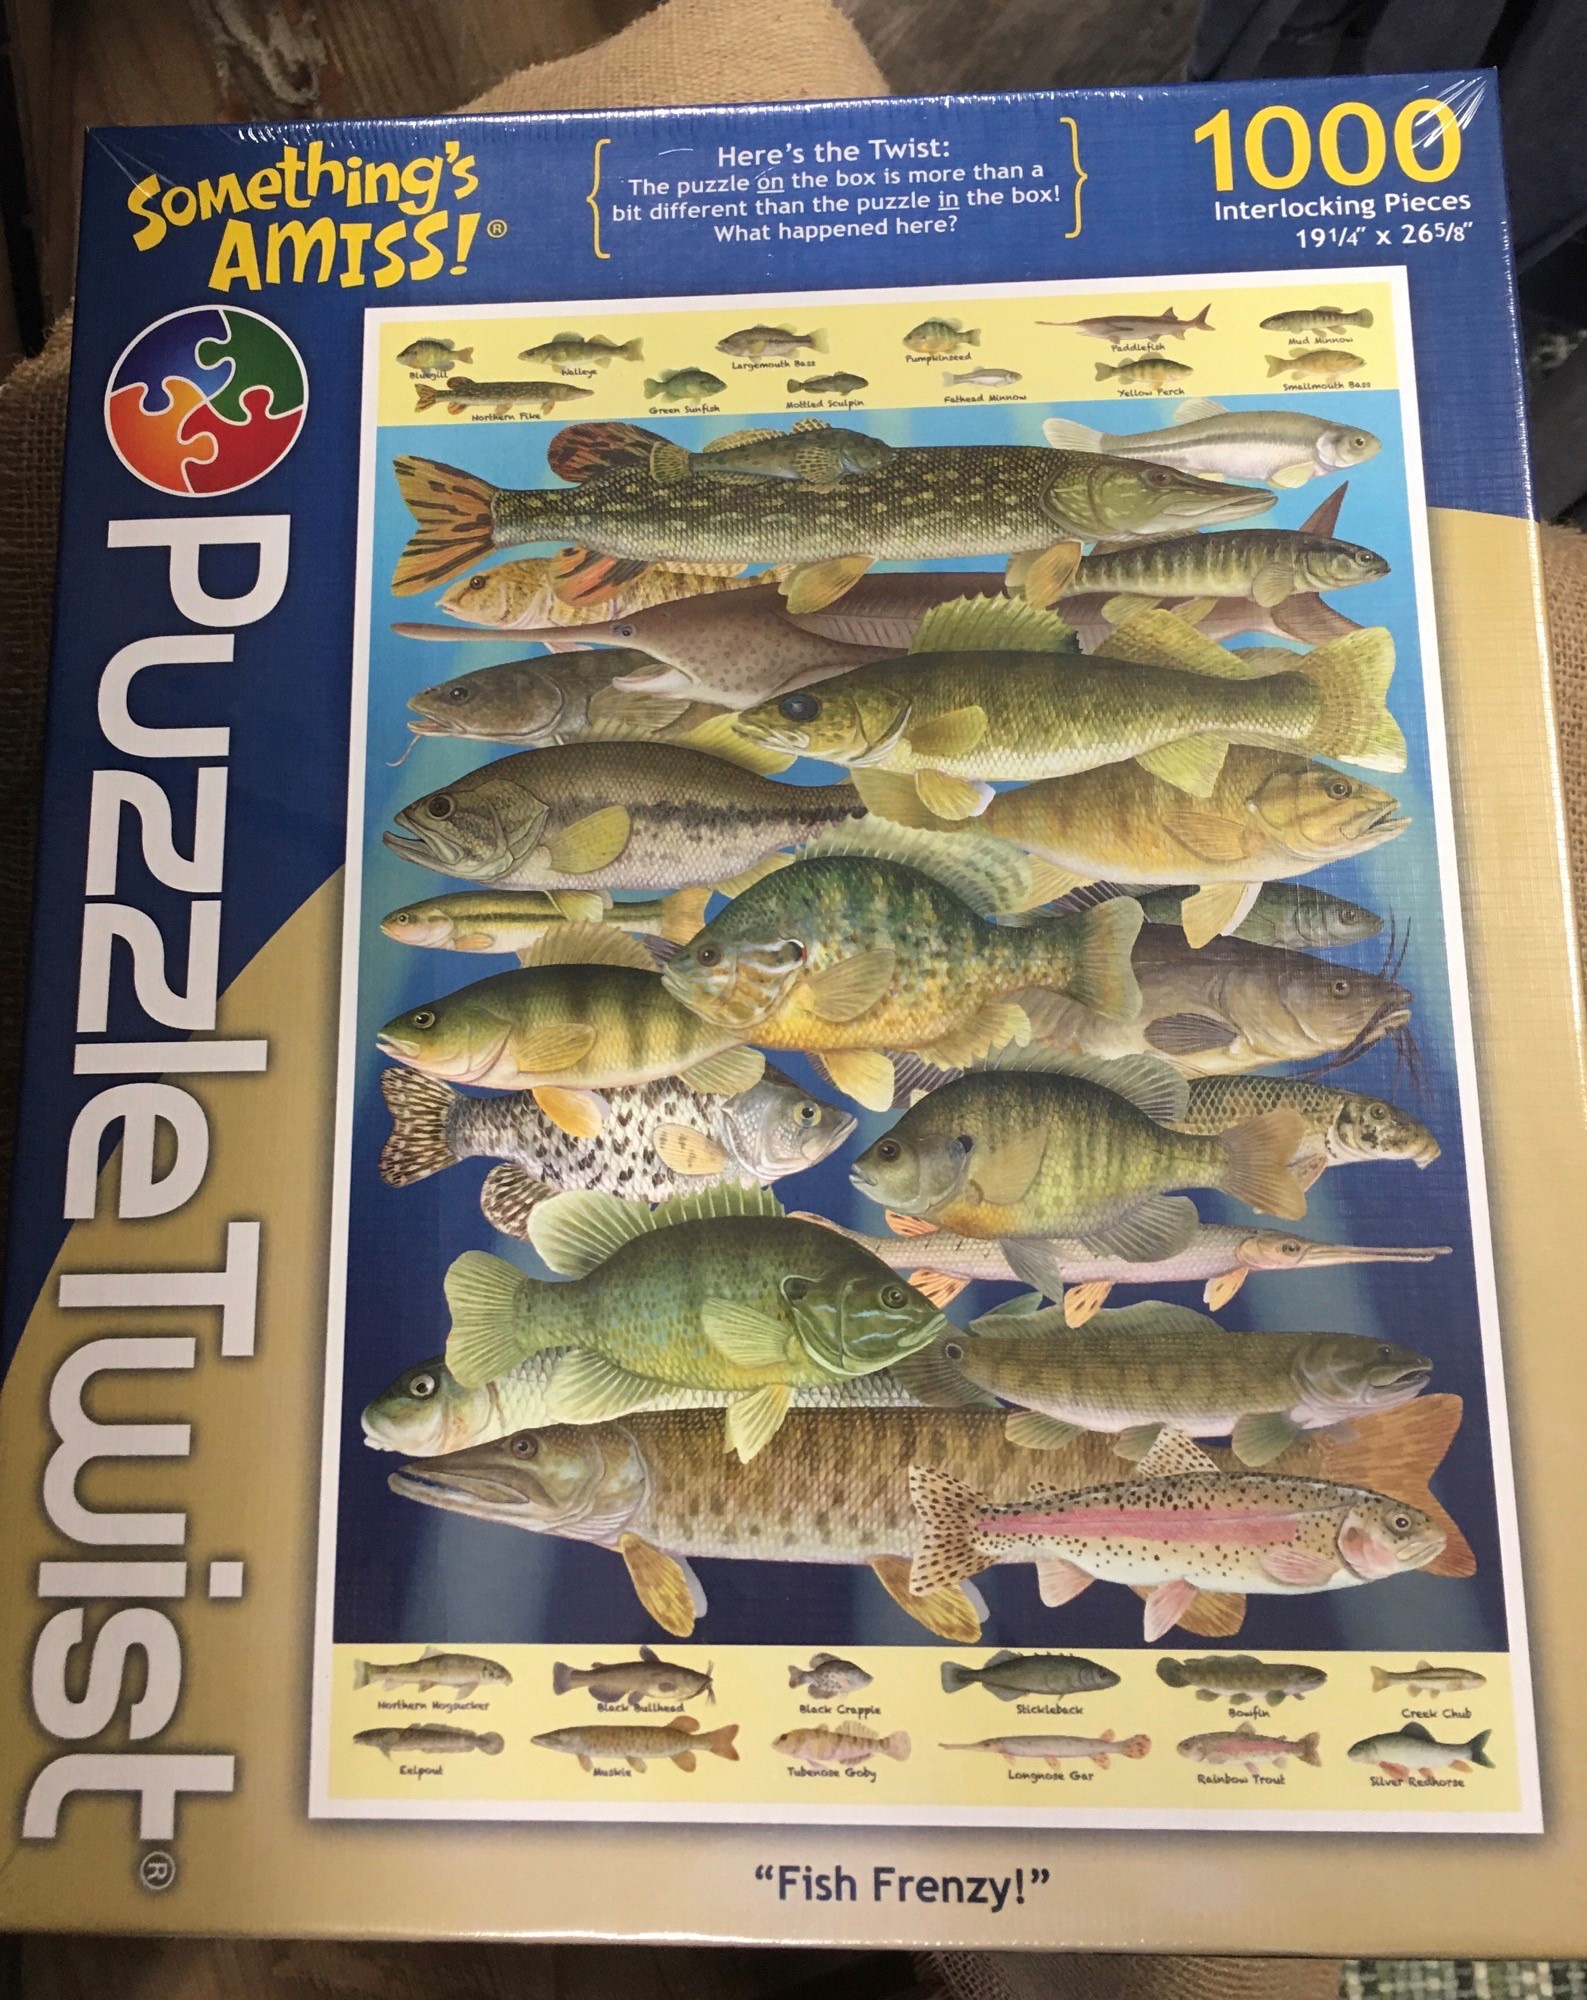 https://visitbrainerd.com/wp-content/uploads/2021/08/Puzzle-Fish-Frenzy.jpg